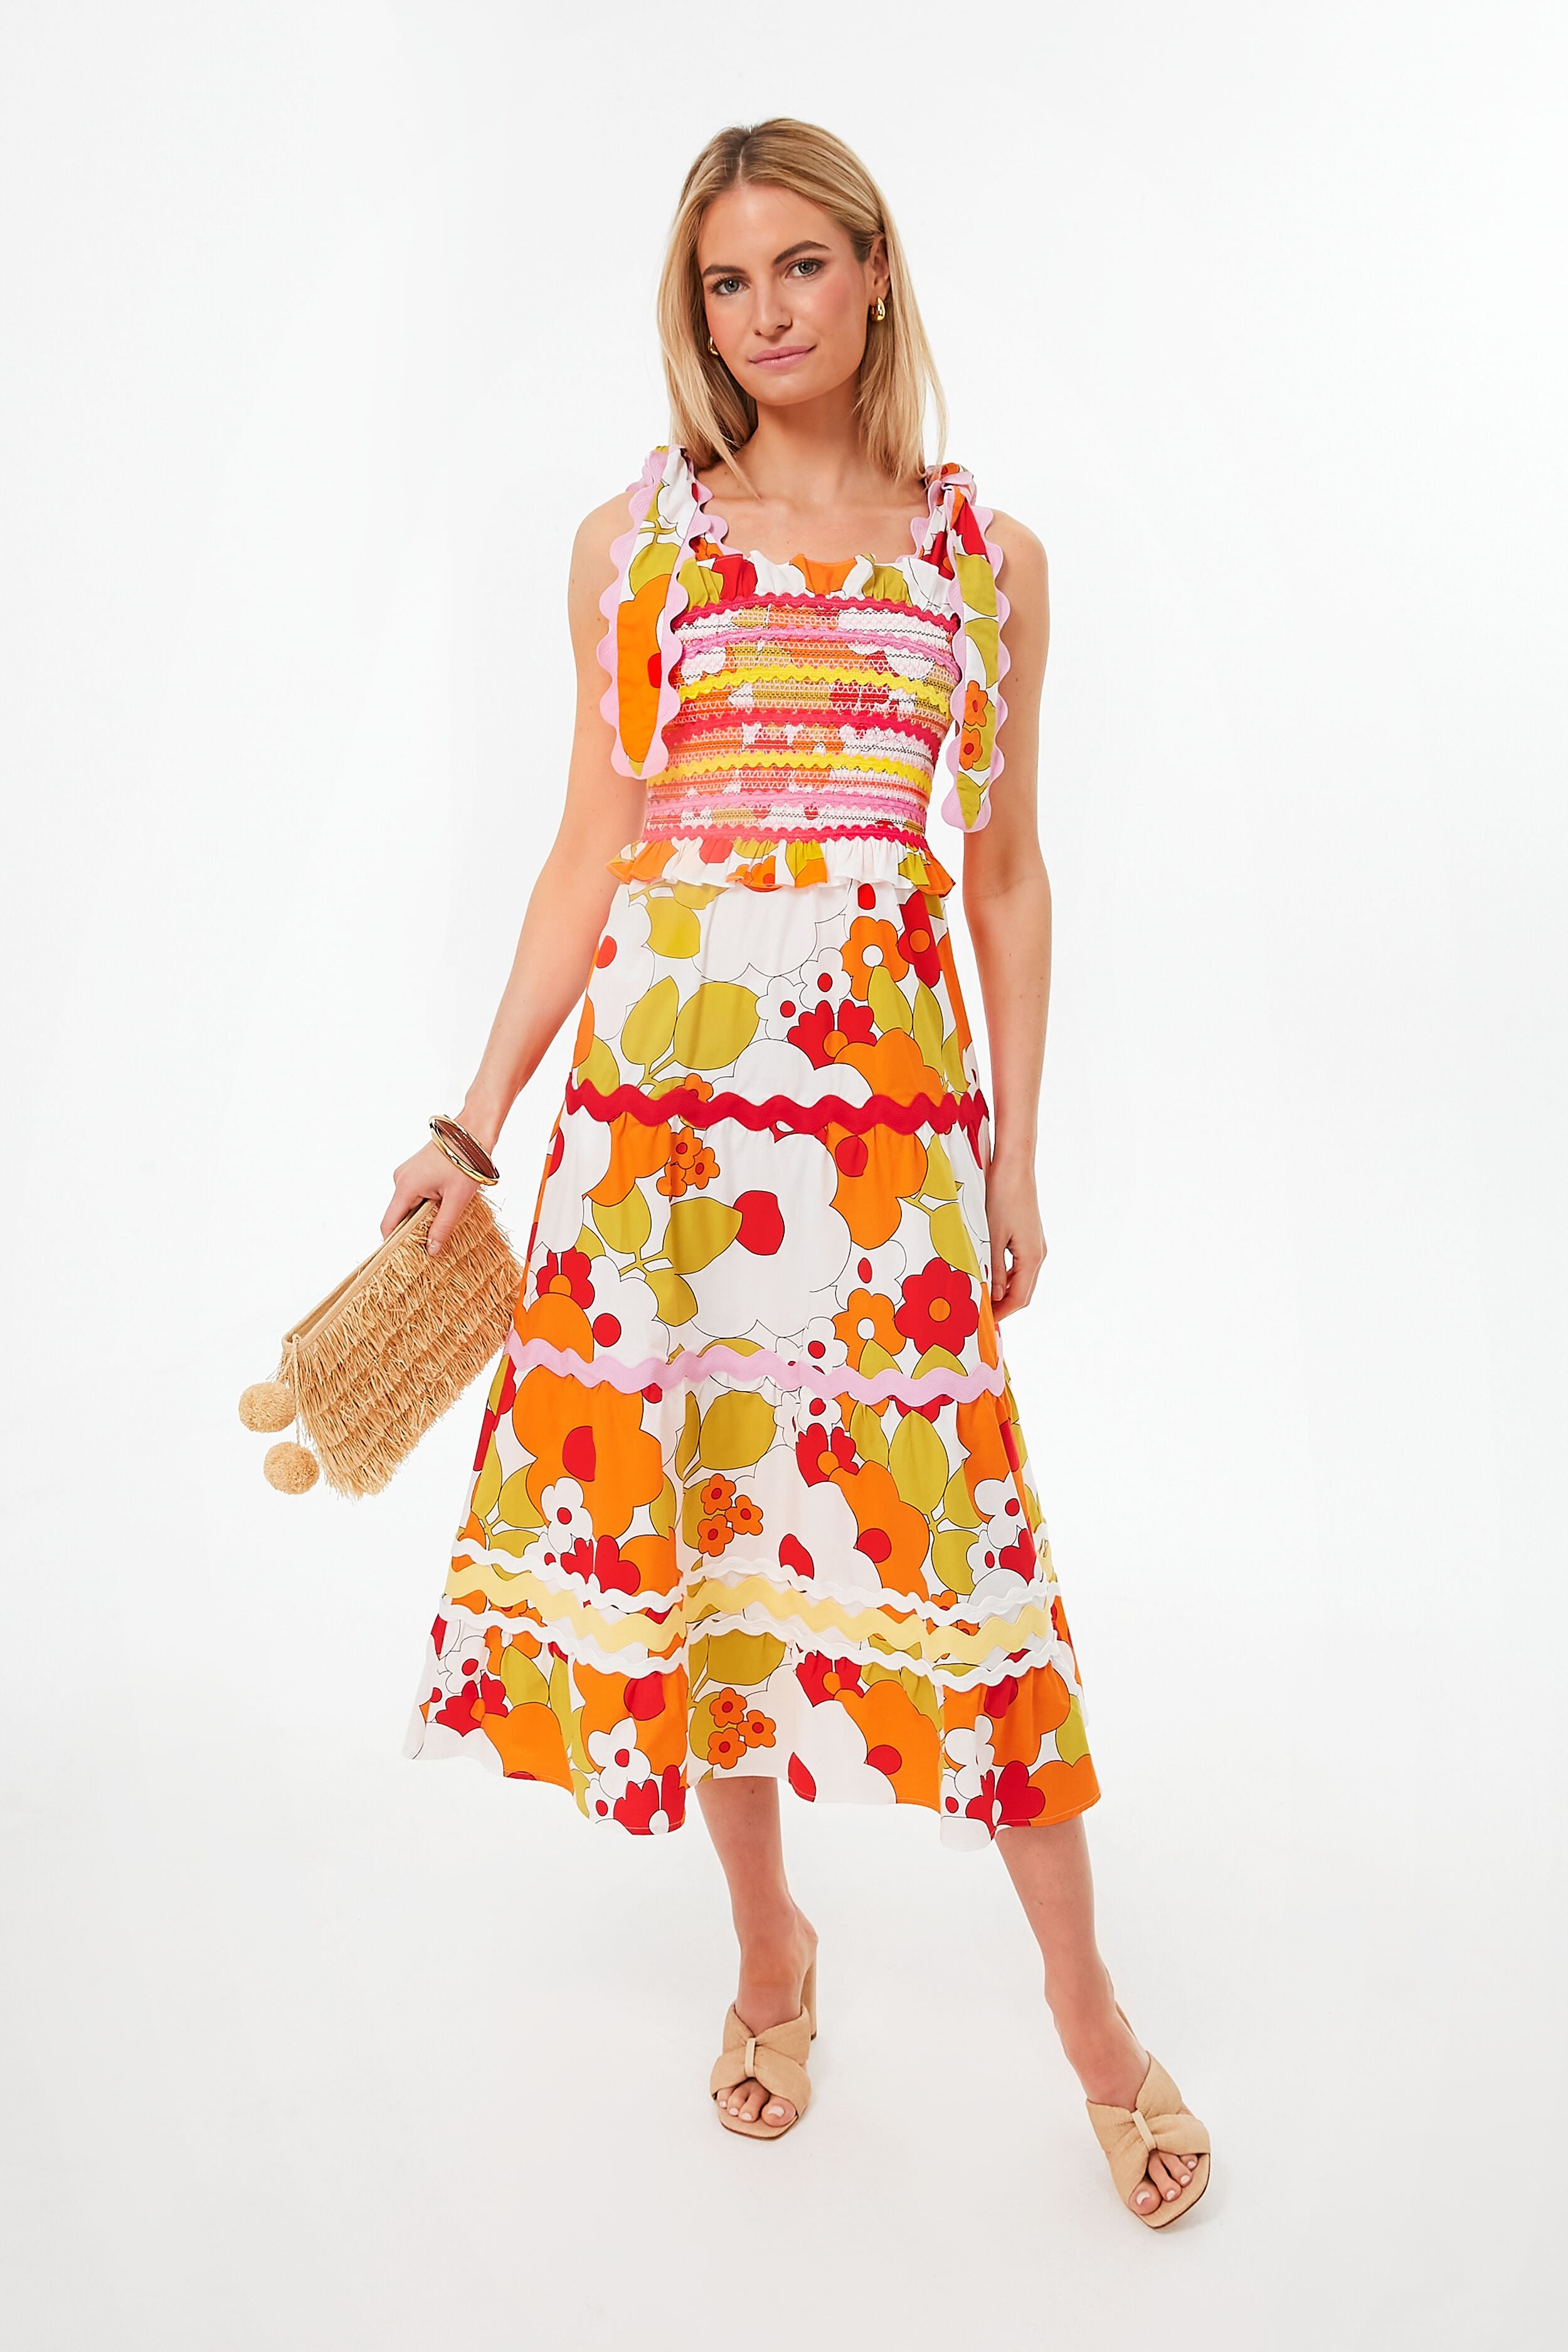 Raffia Bags, The Summer Staple / Fashion / Emma Rose Style